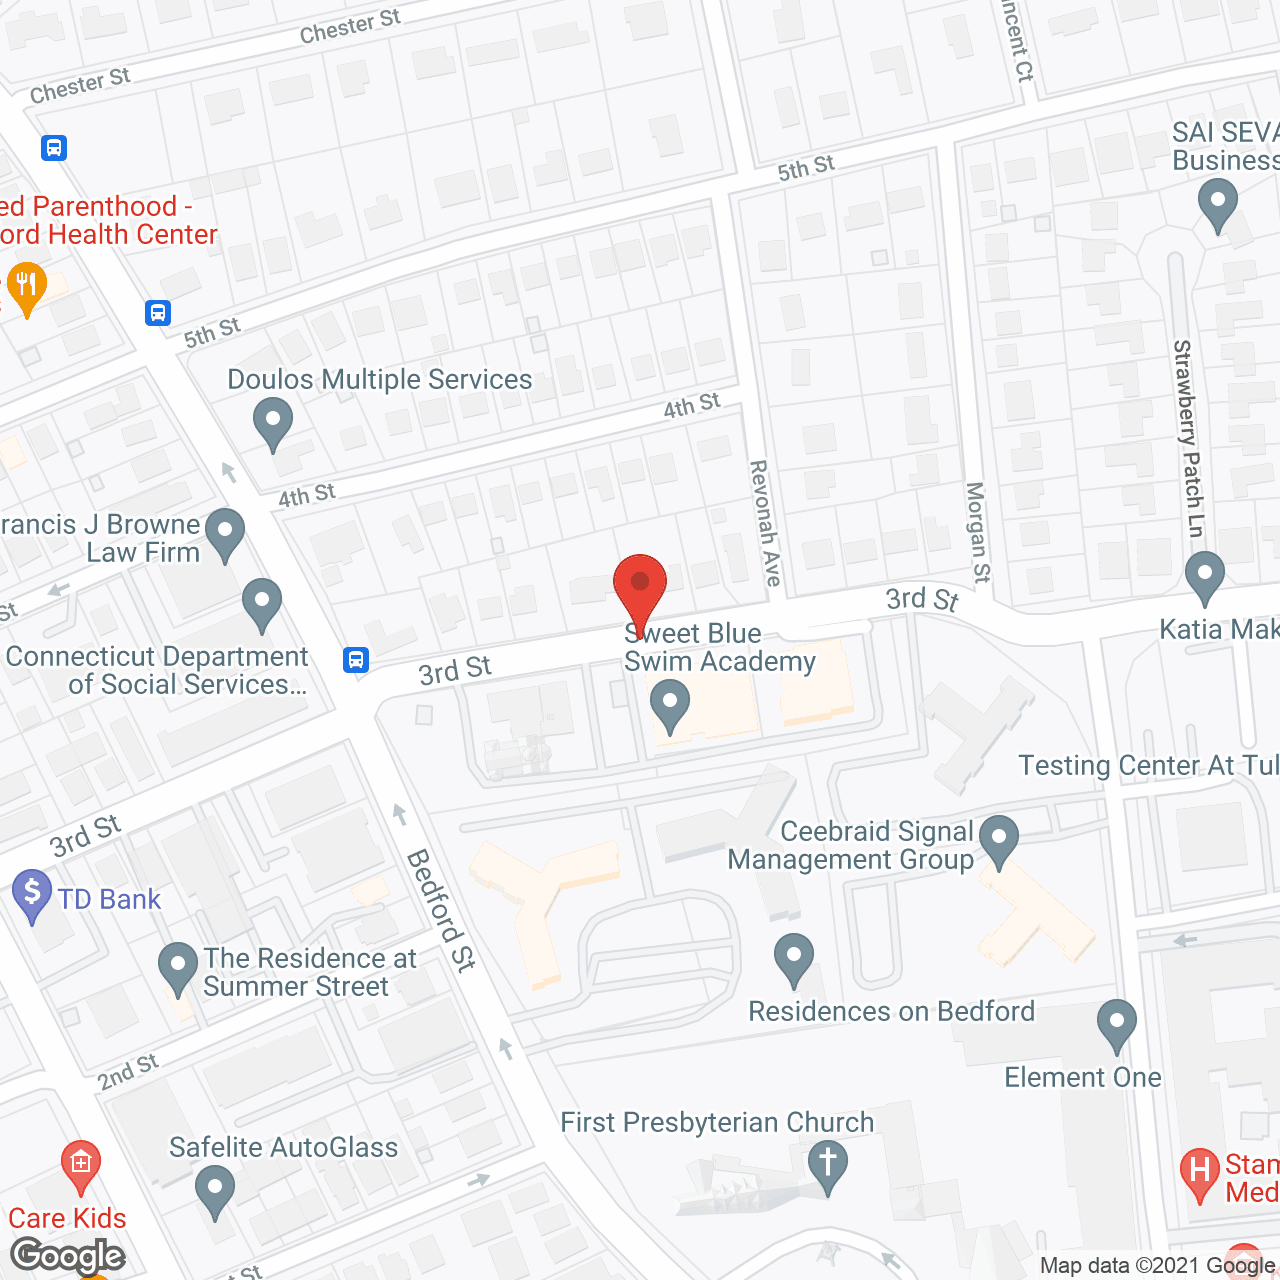 Atria Stamford in google map